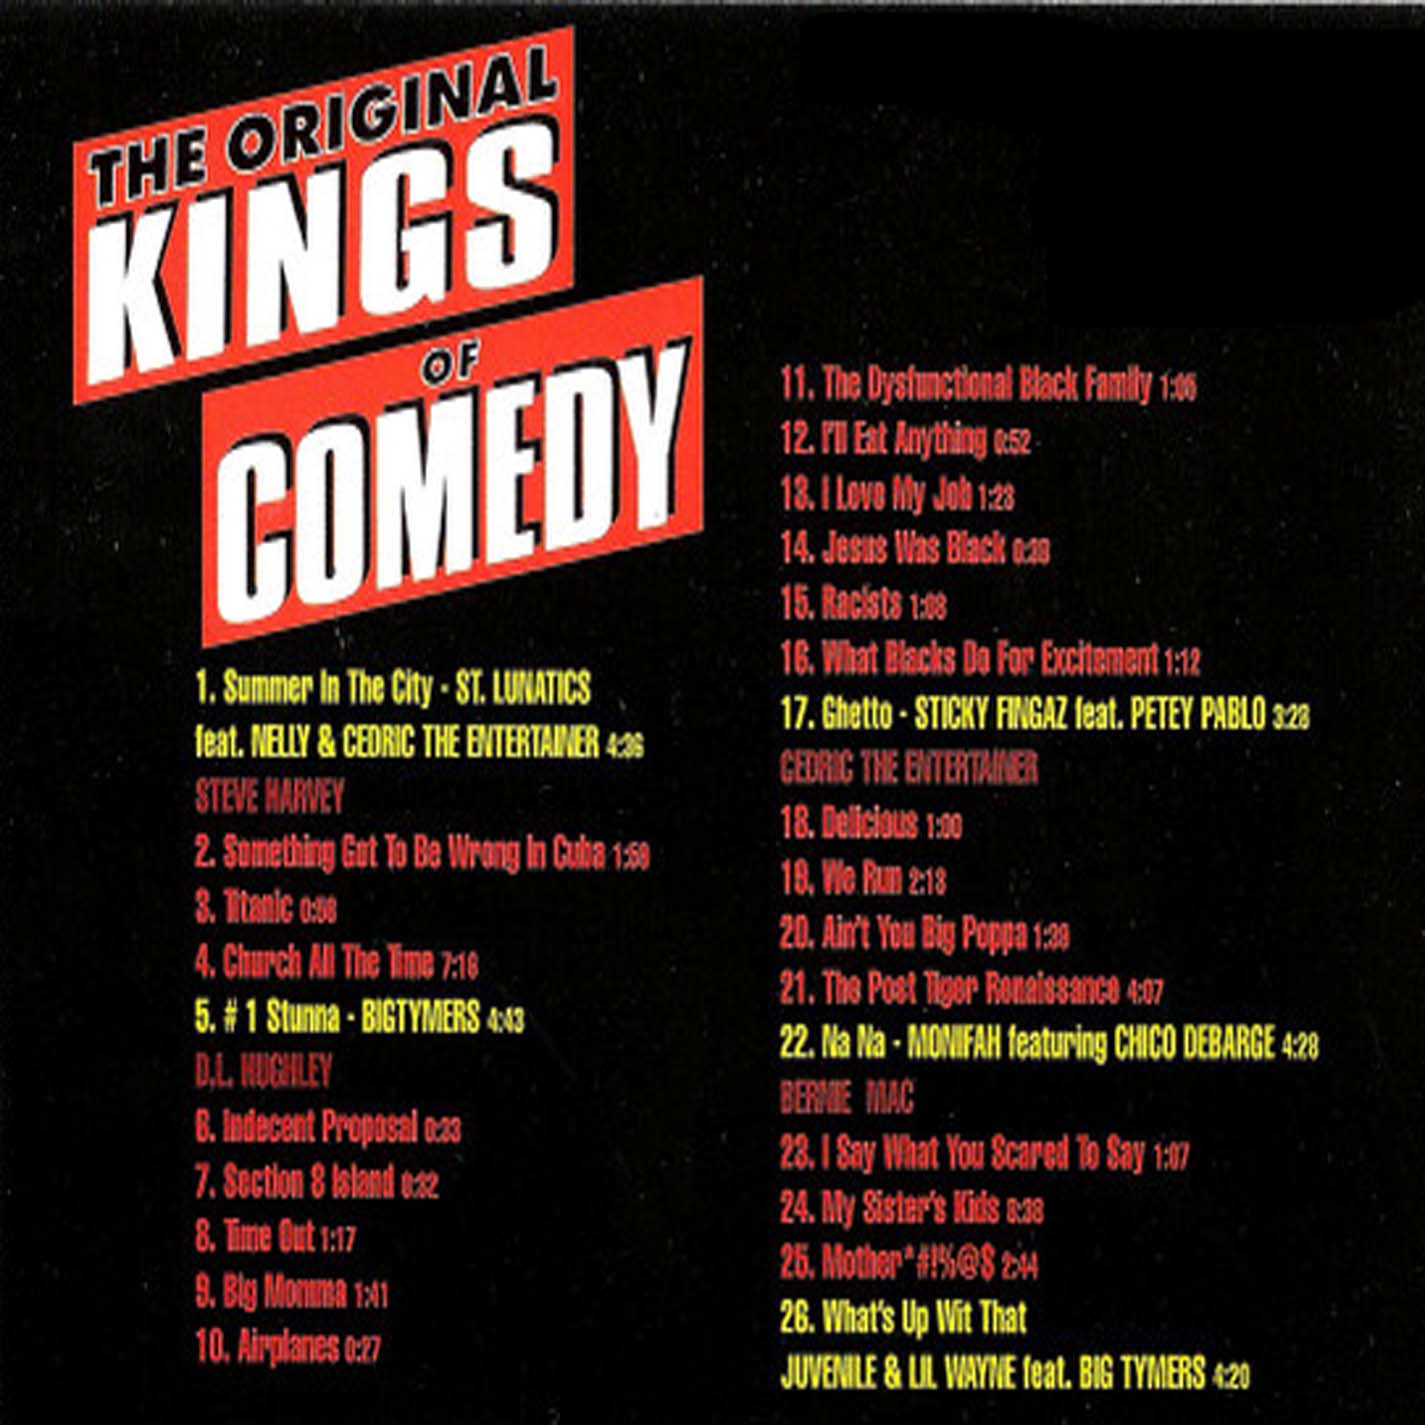 THE ORIGINAL KINGS OF COMEDY - COMEDY SOUNDTRACK (CD LP) c2000